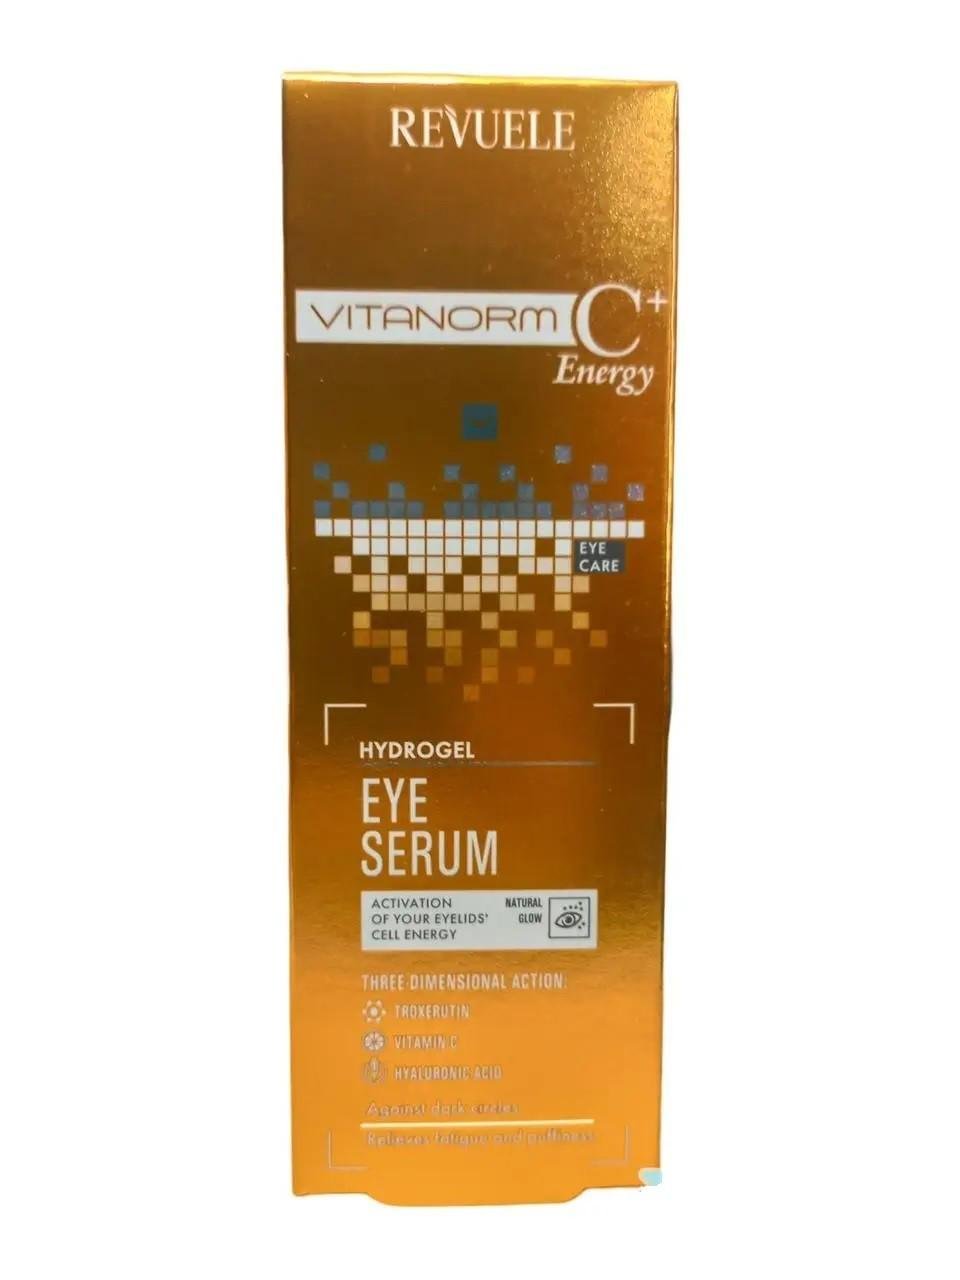 Сыворотка Revuele Vitanorm C+ Energy для кожи вокруг глаз гидрогелевая 25 мл (112709)